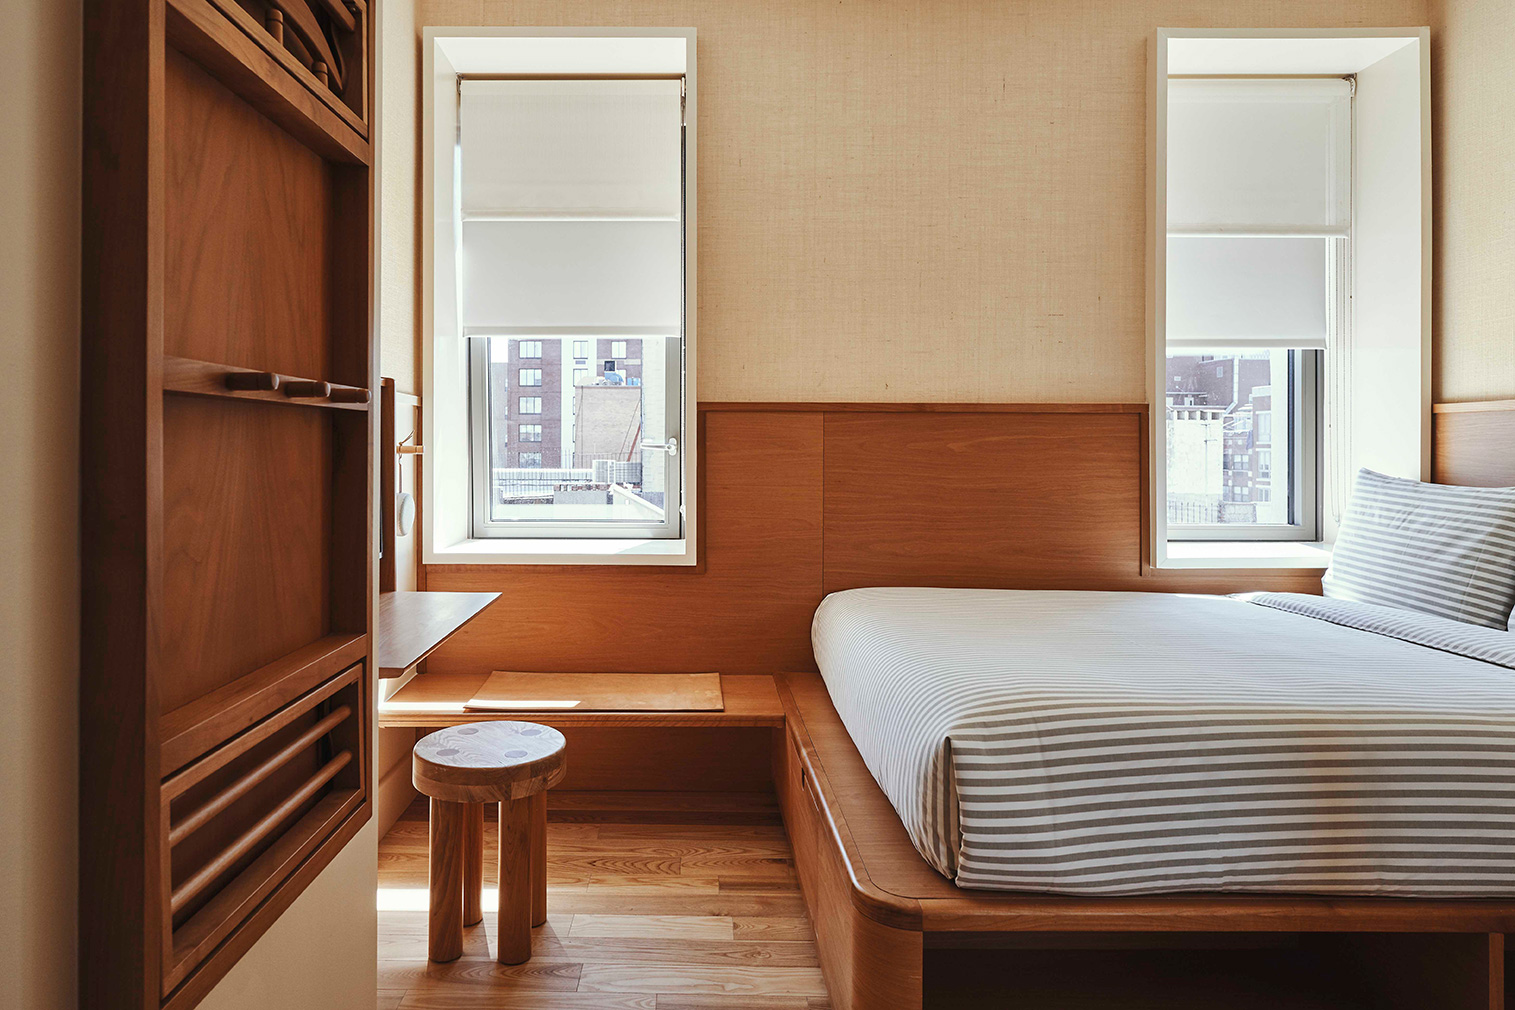 New York’s Sister City hotel has bento box-inspired bedrooms